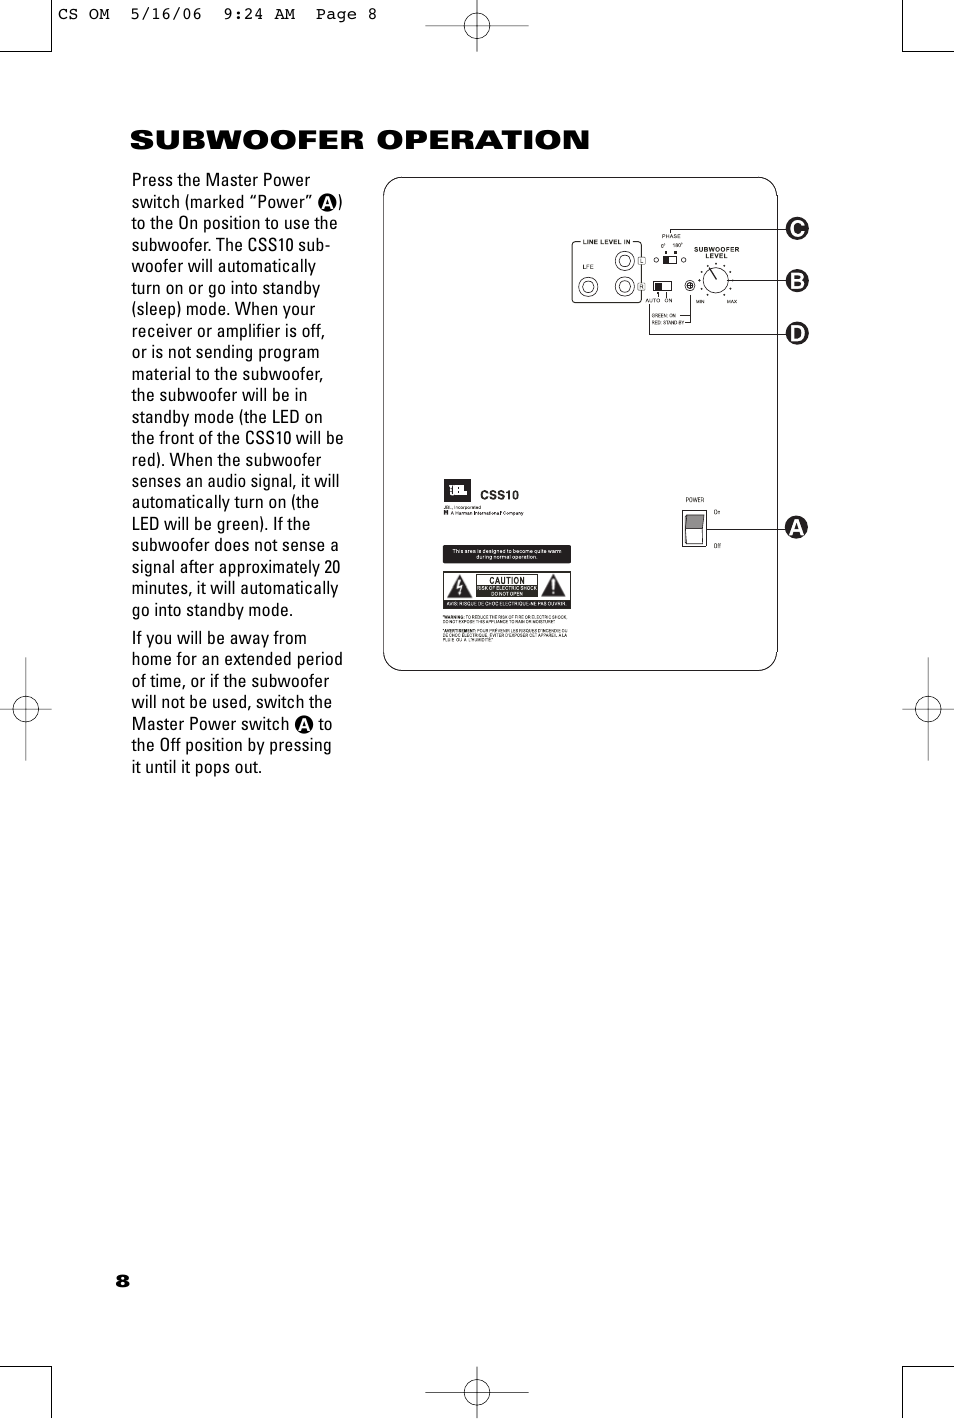 Subwoofer operation | JBL CSS10 User Manual | Page 8 / 12 | Original mode